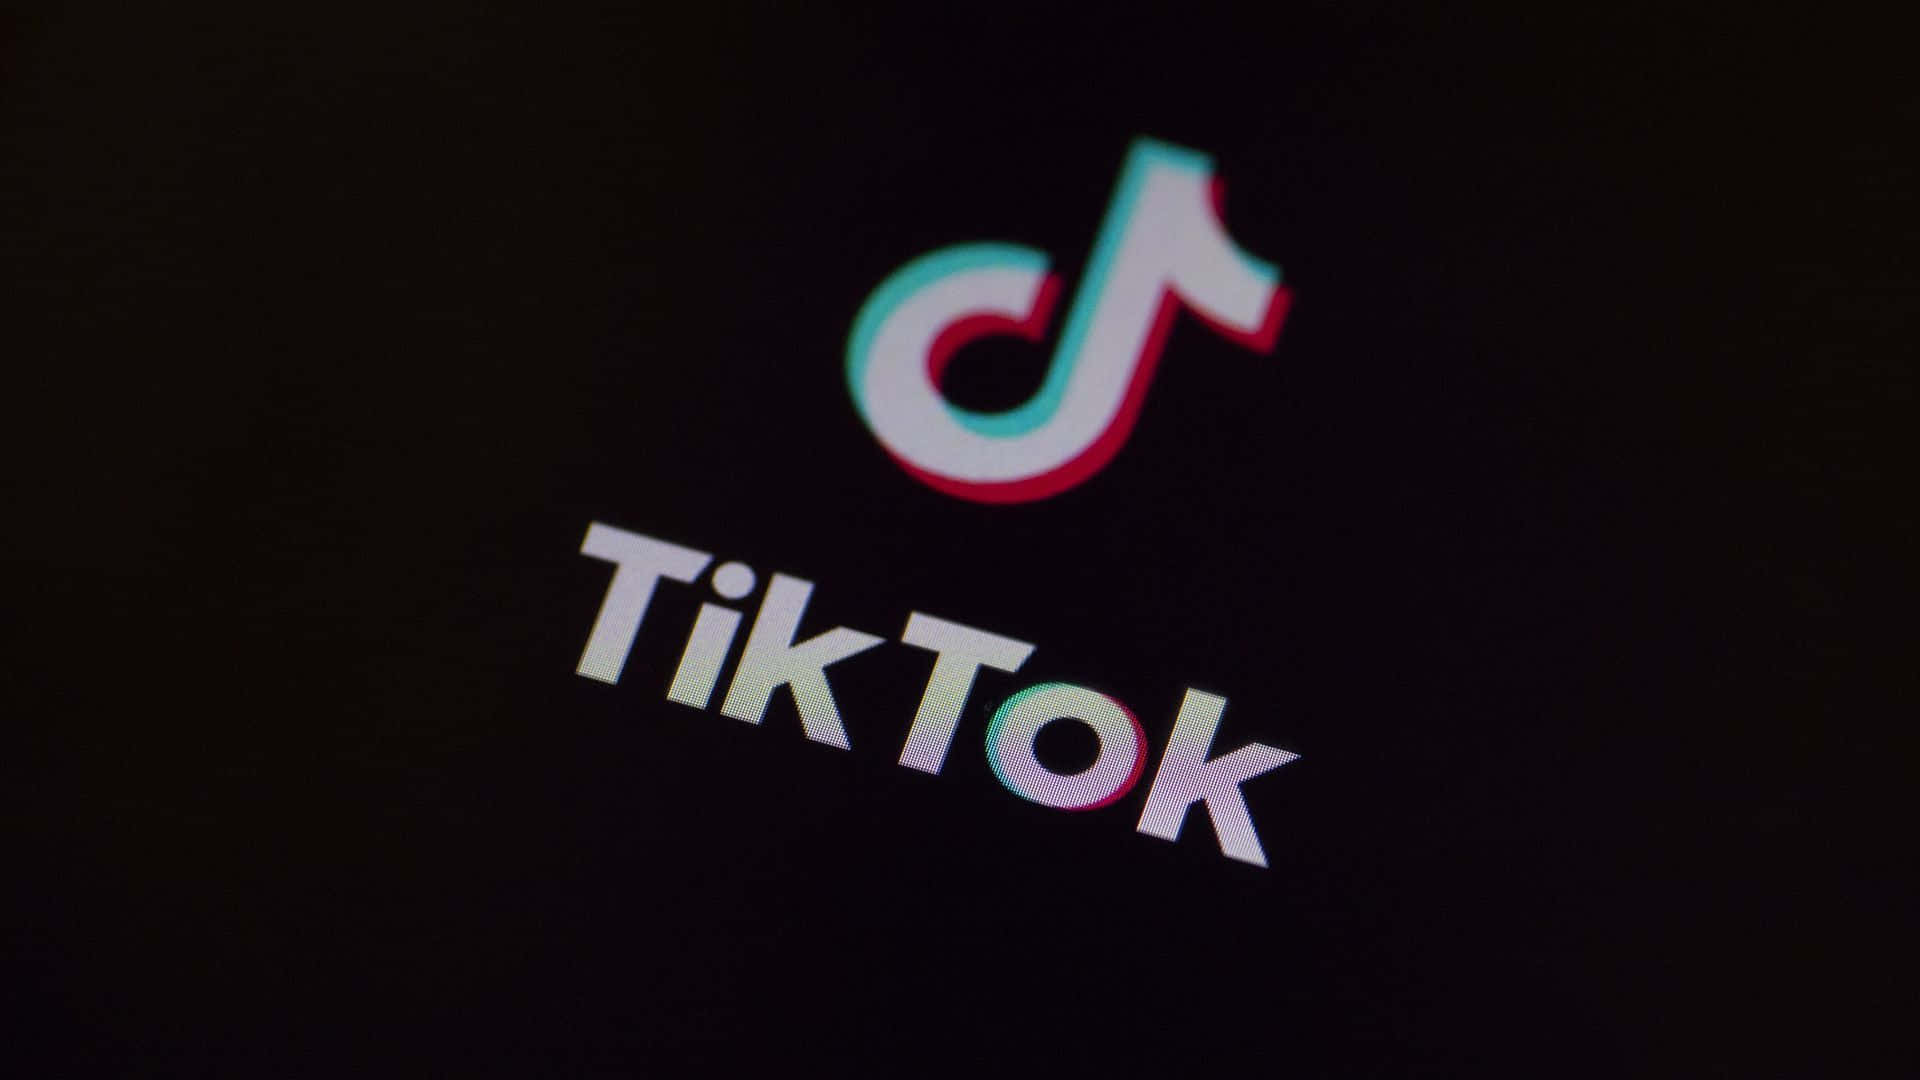 tiktok logo on a black screen